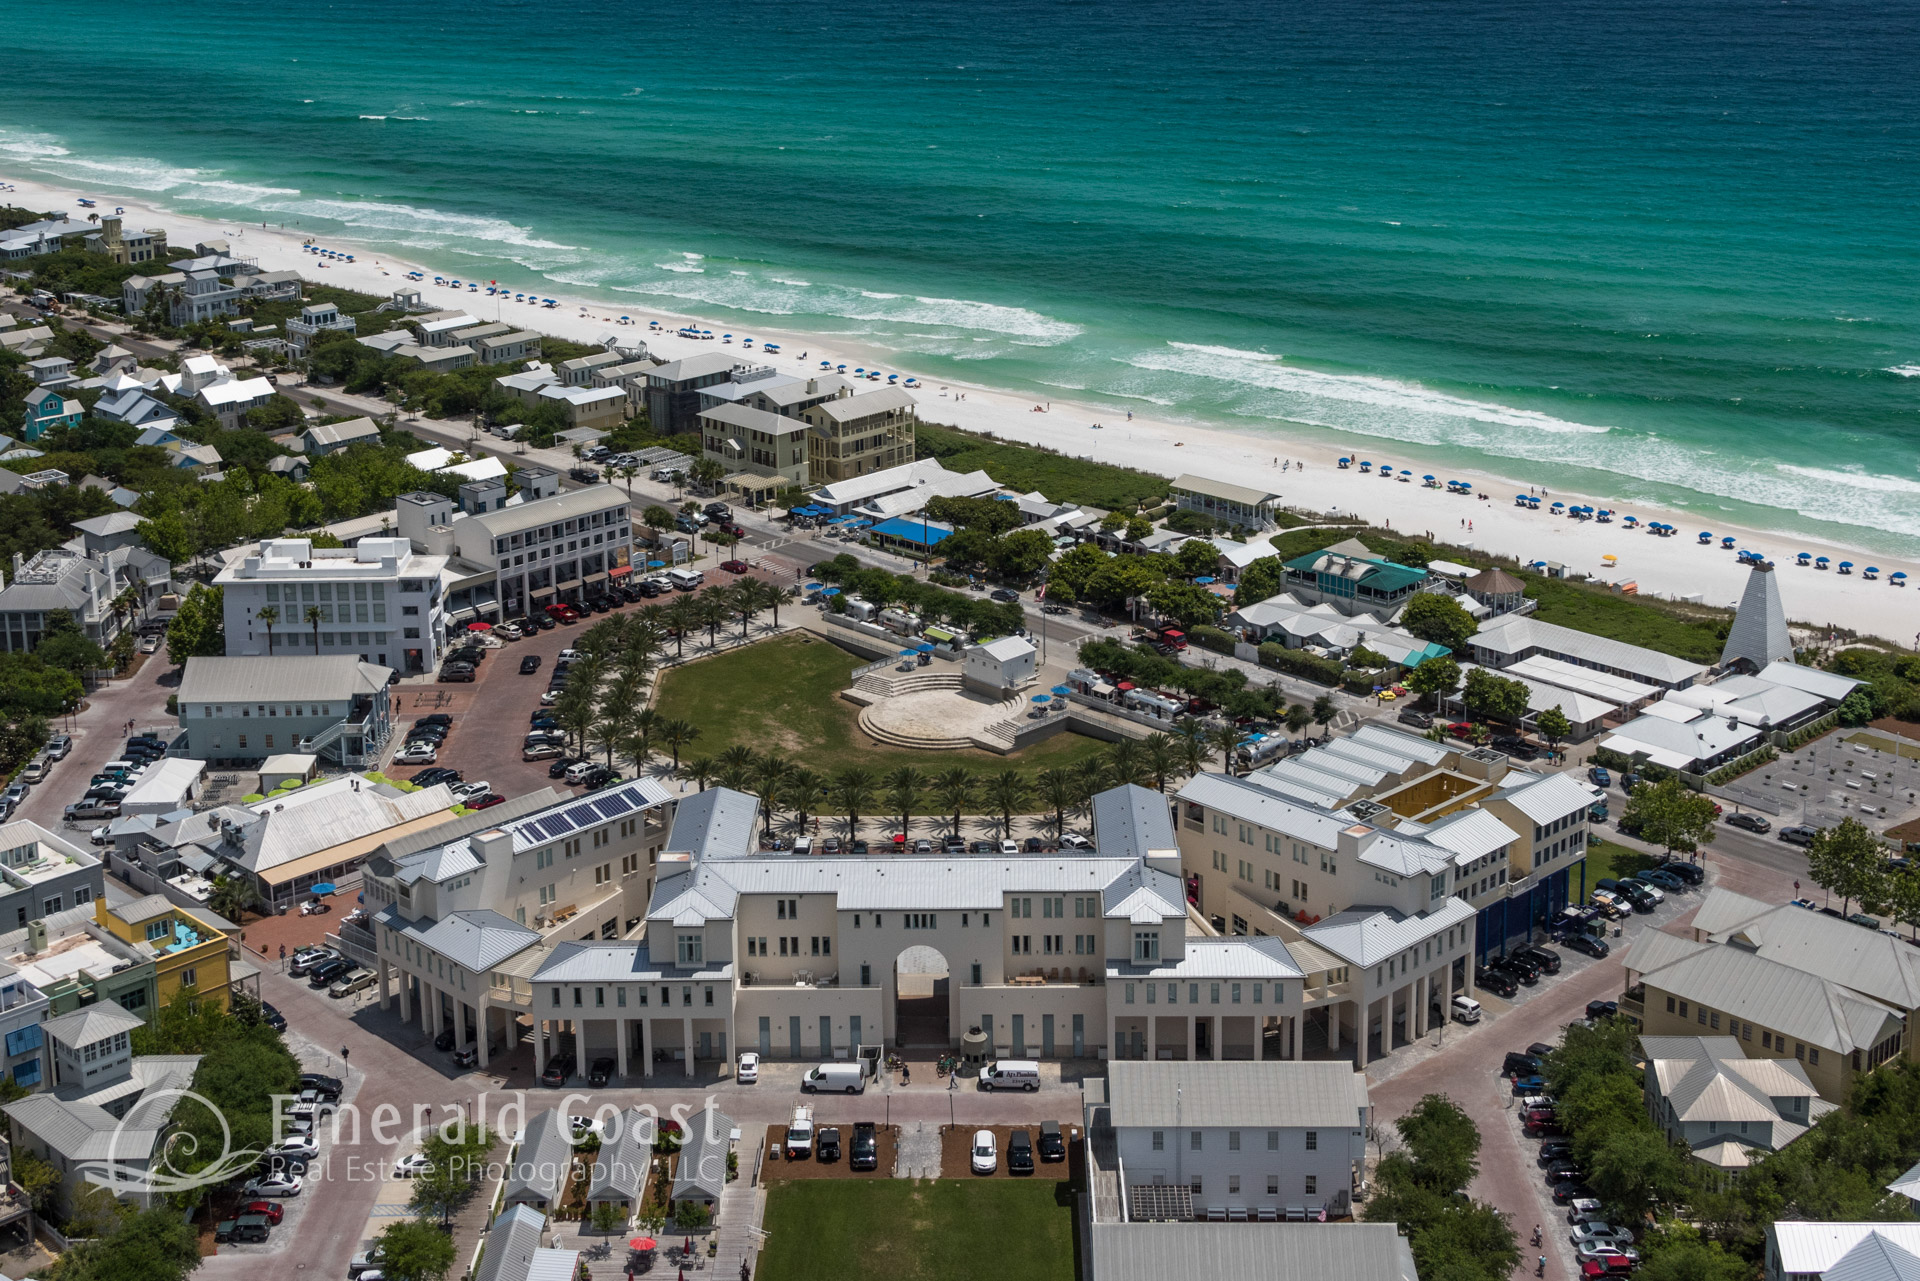 Aerial Photo of Seaside, Florida